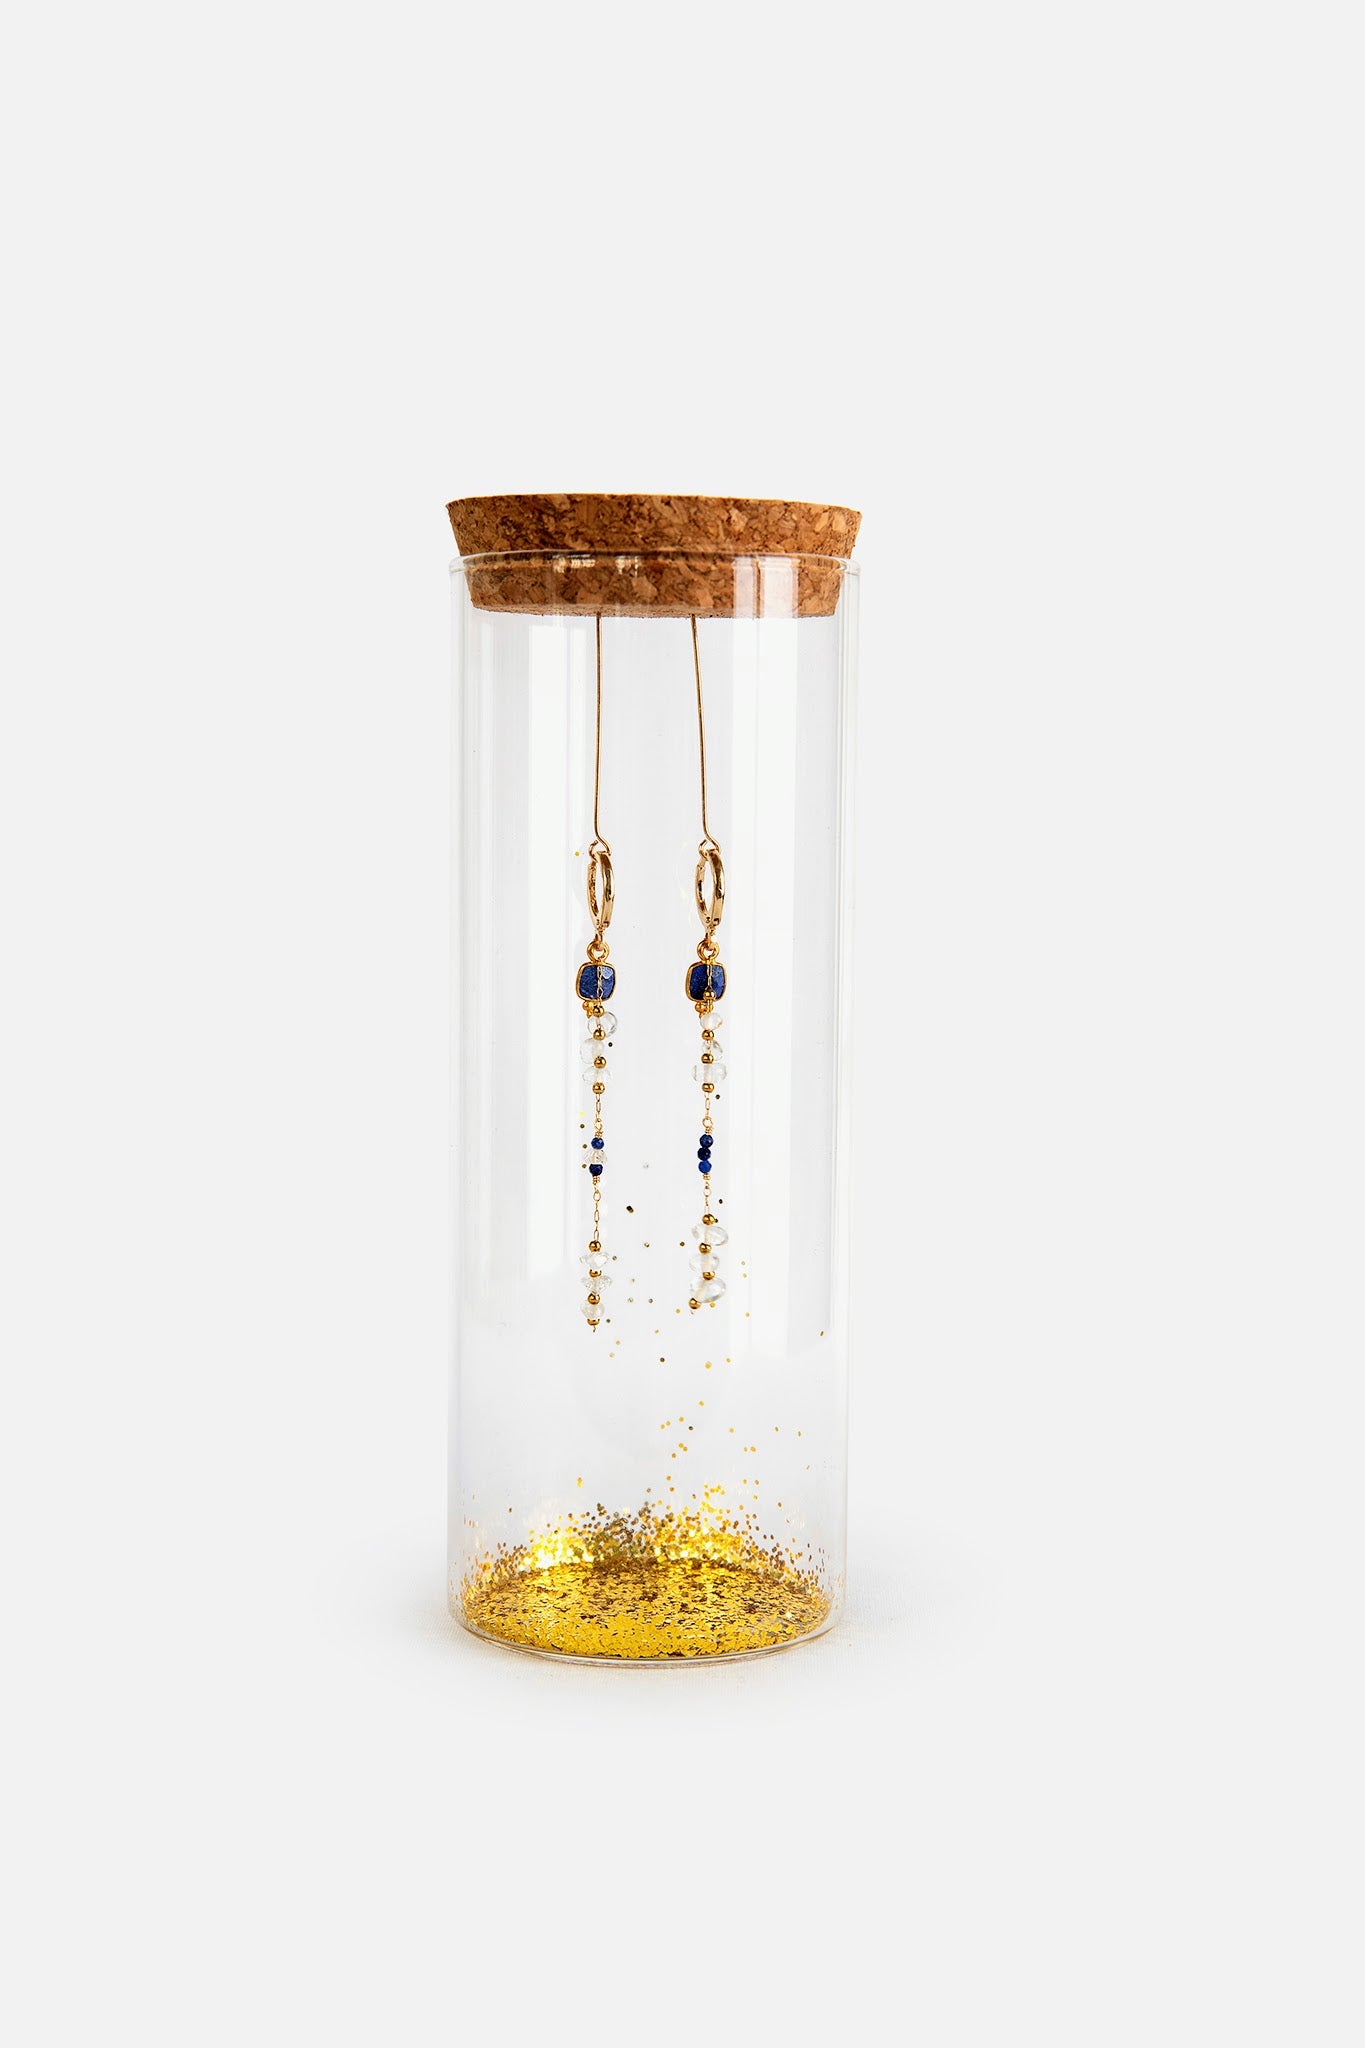 SG36 - Symmetrical Tourmaline earrings with Lapis Lazuli